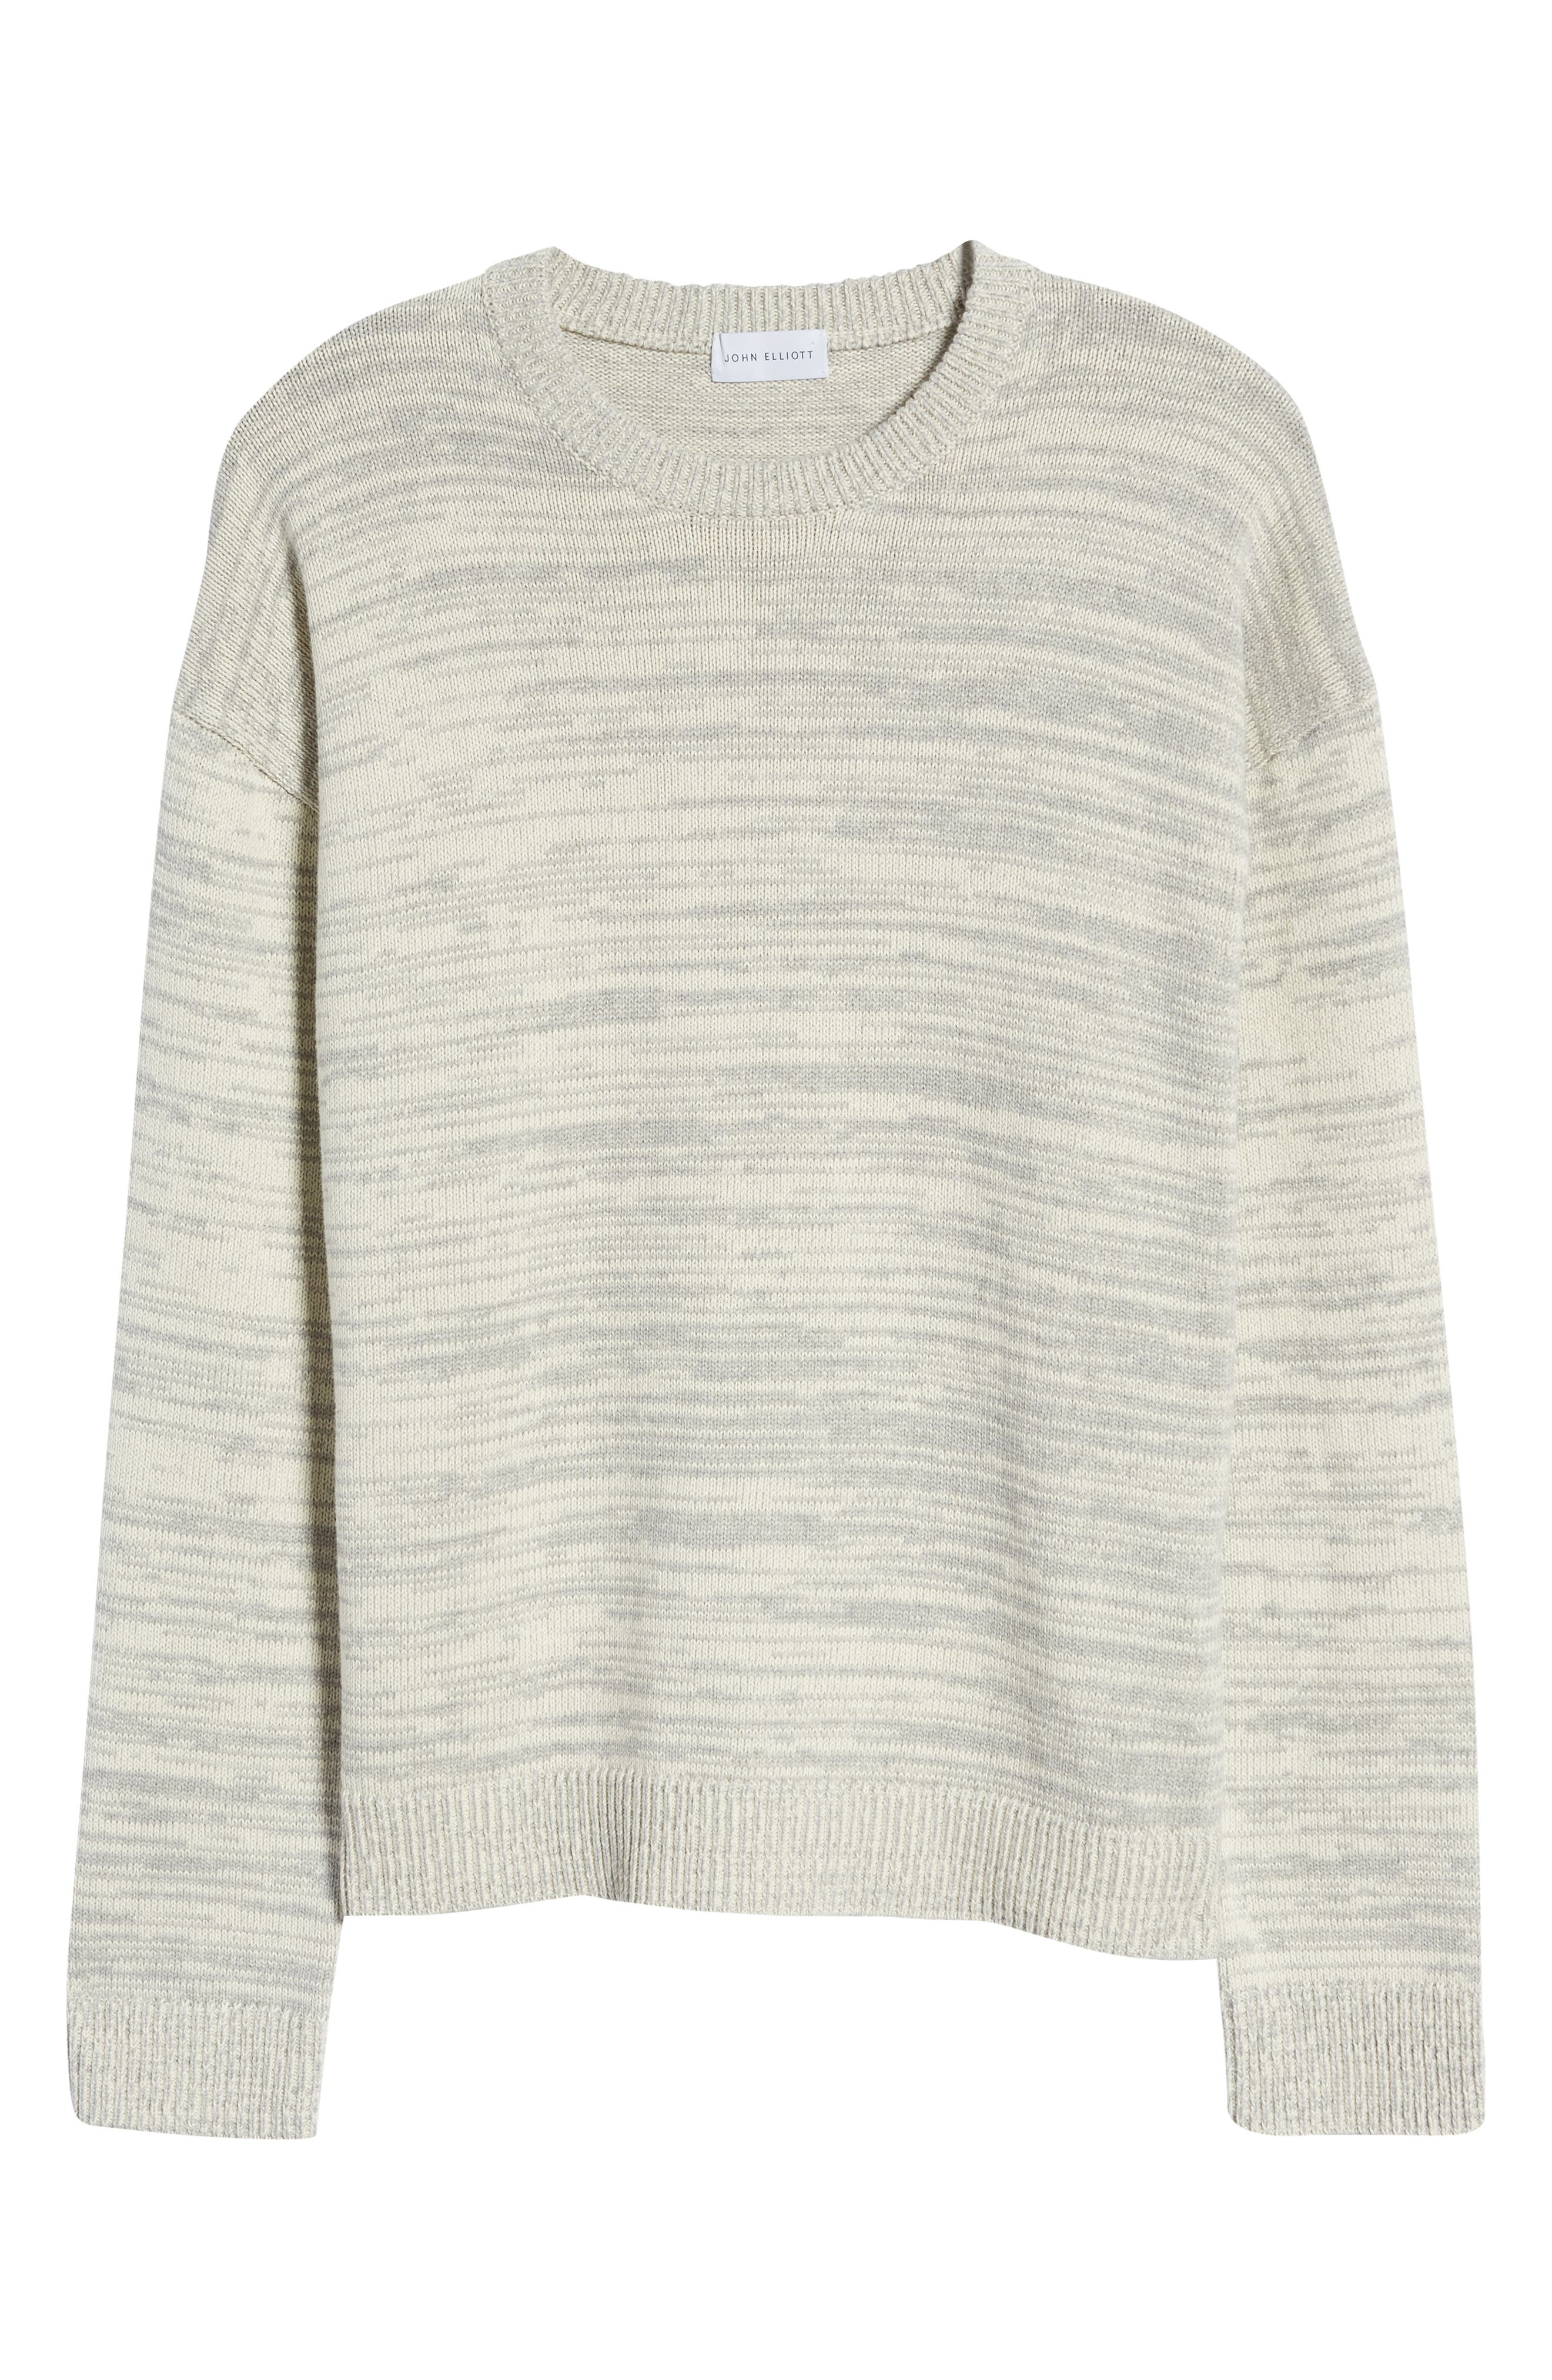 John Elliott Intermingle Cotton Sweater in Ivory X Ash at Nordstrom, Size Xx-Large